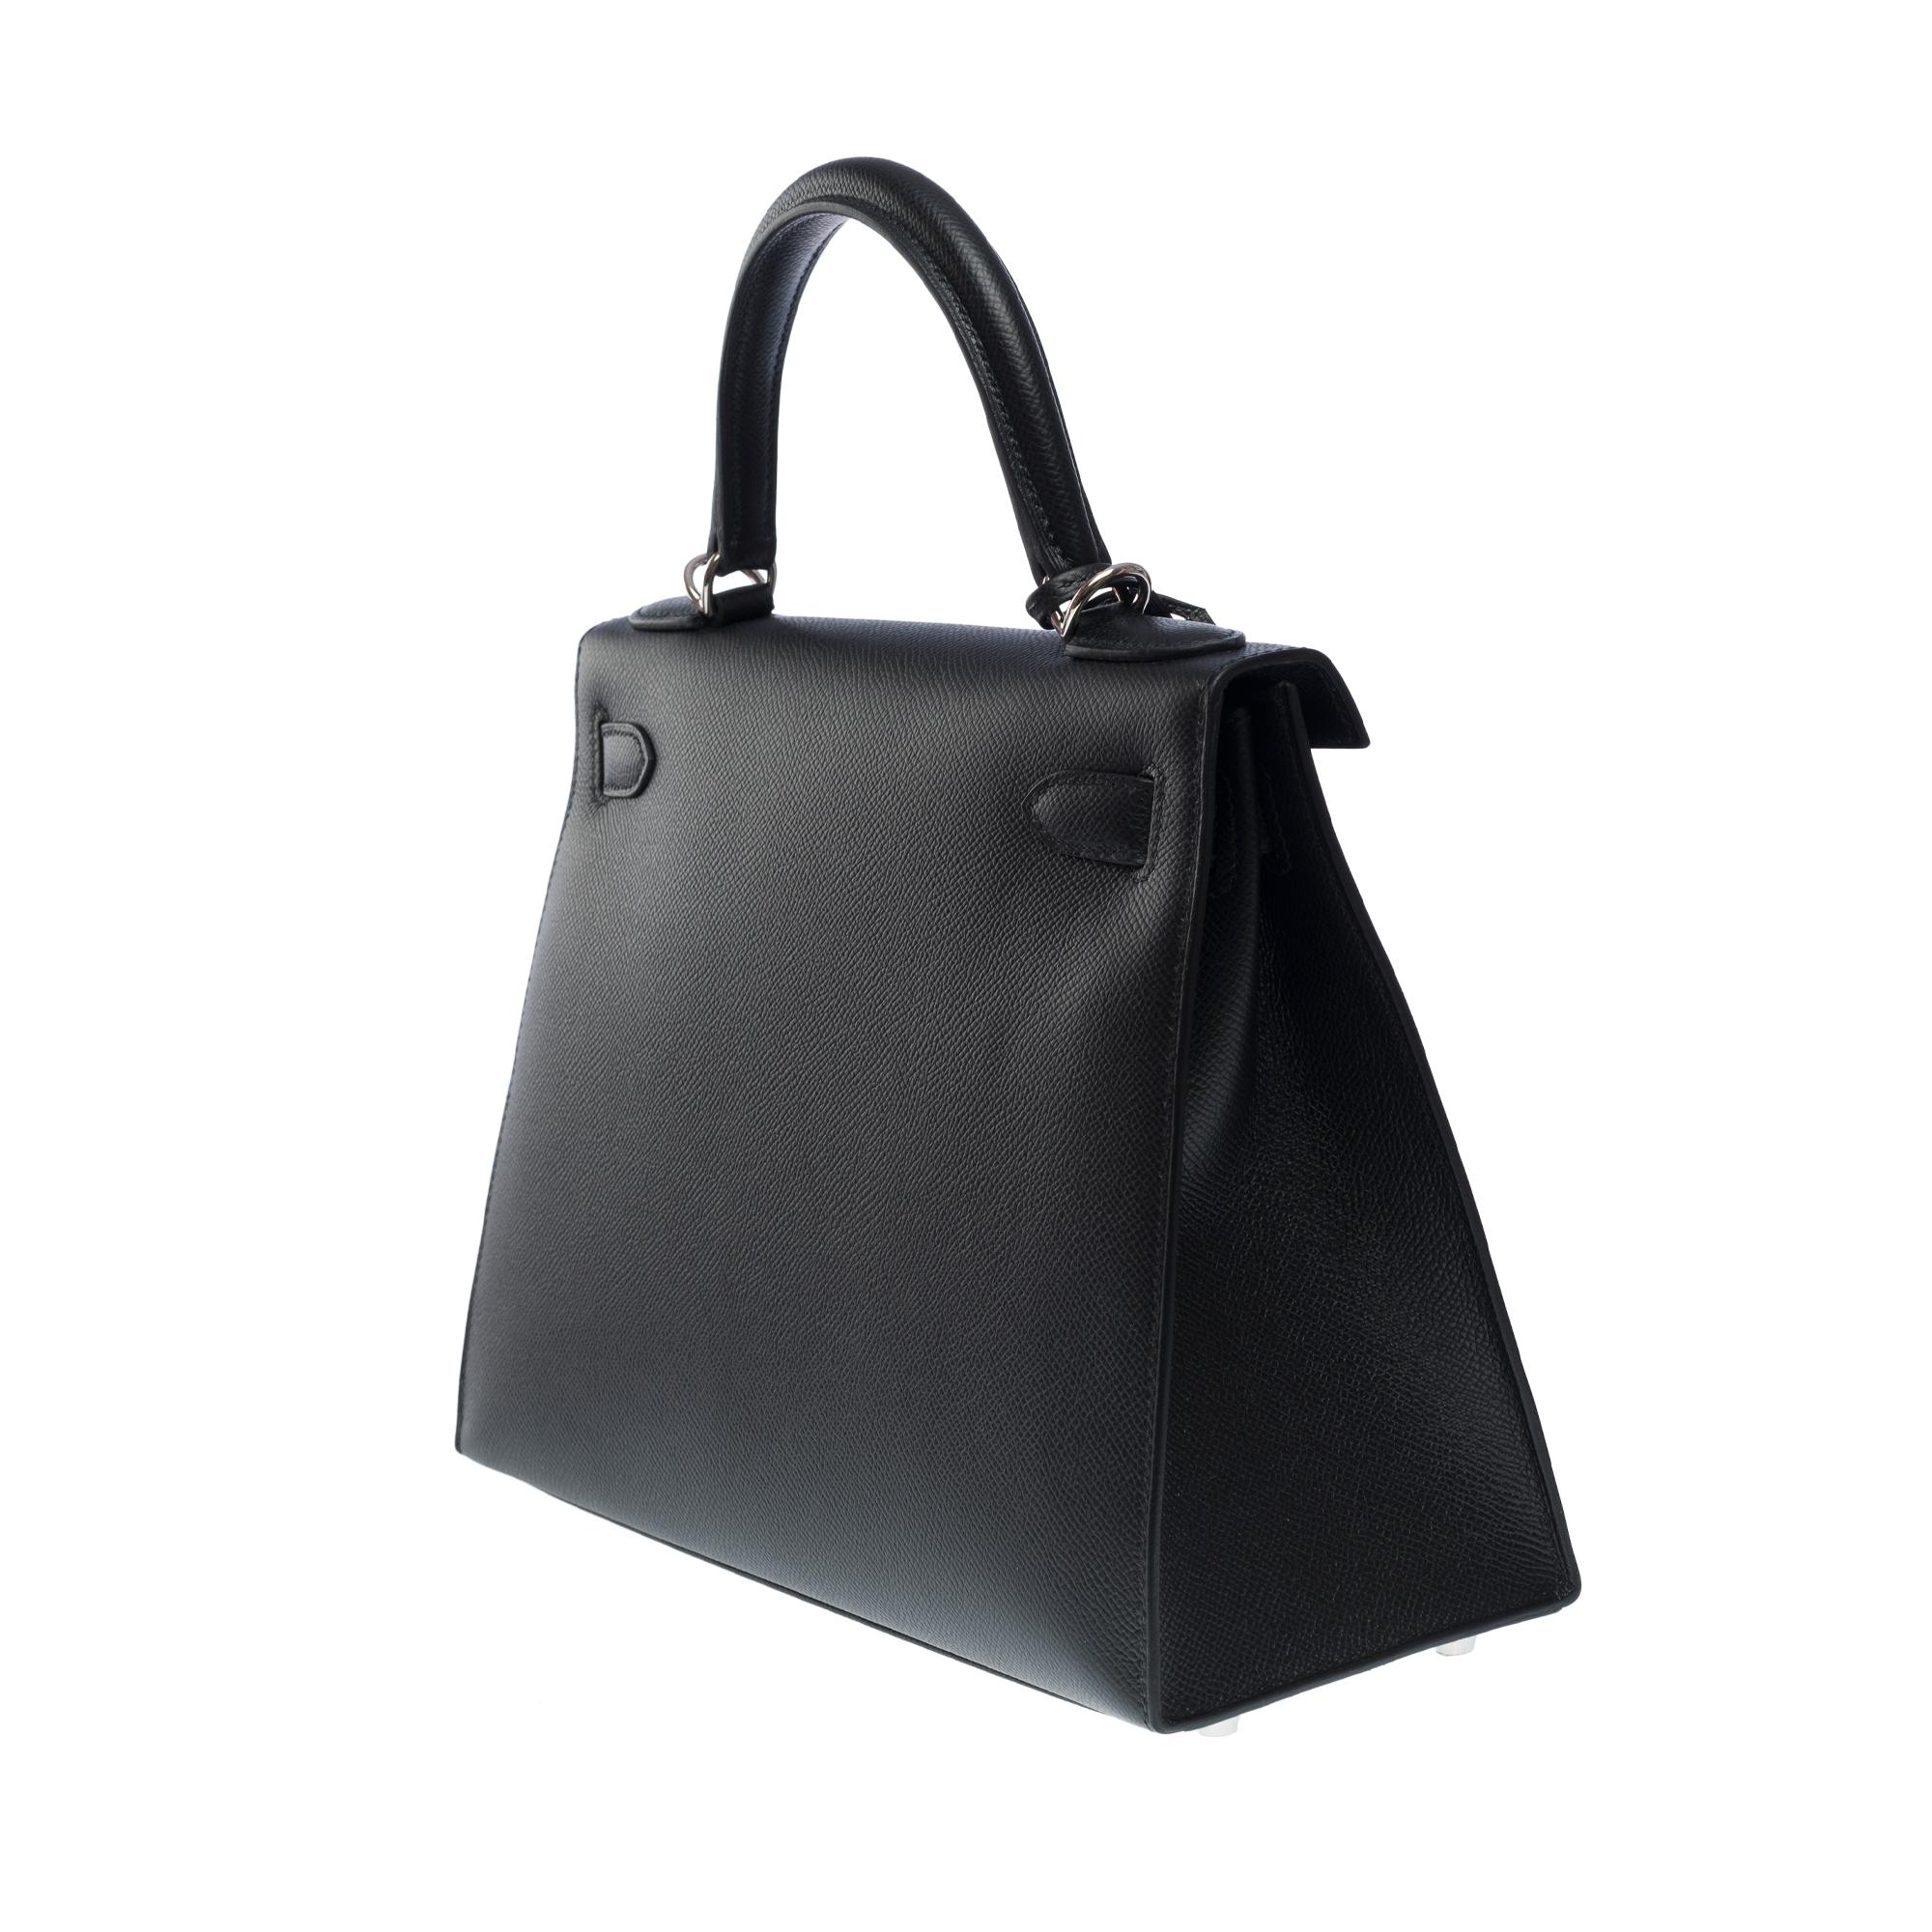 Women's New Hermès Kelly 28 sellier handbag strap in black Epsom leather, SHW